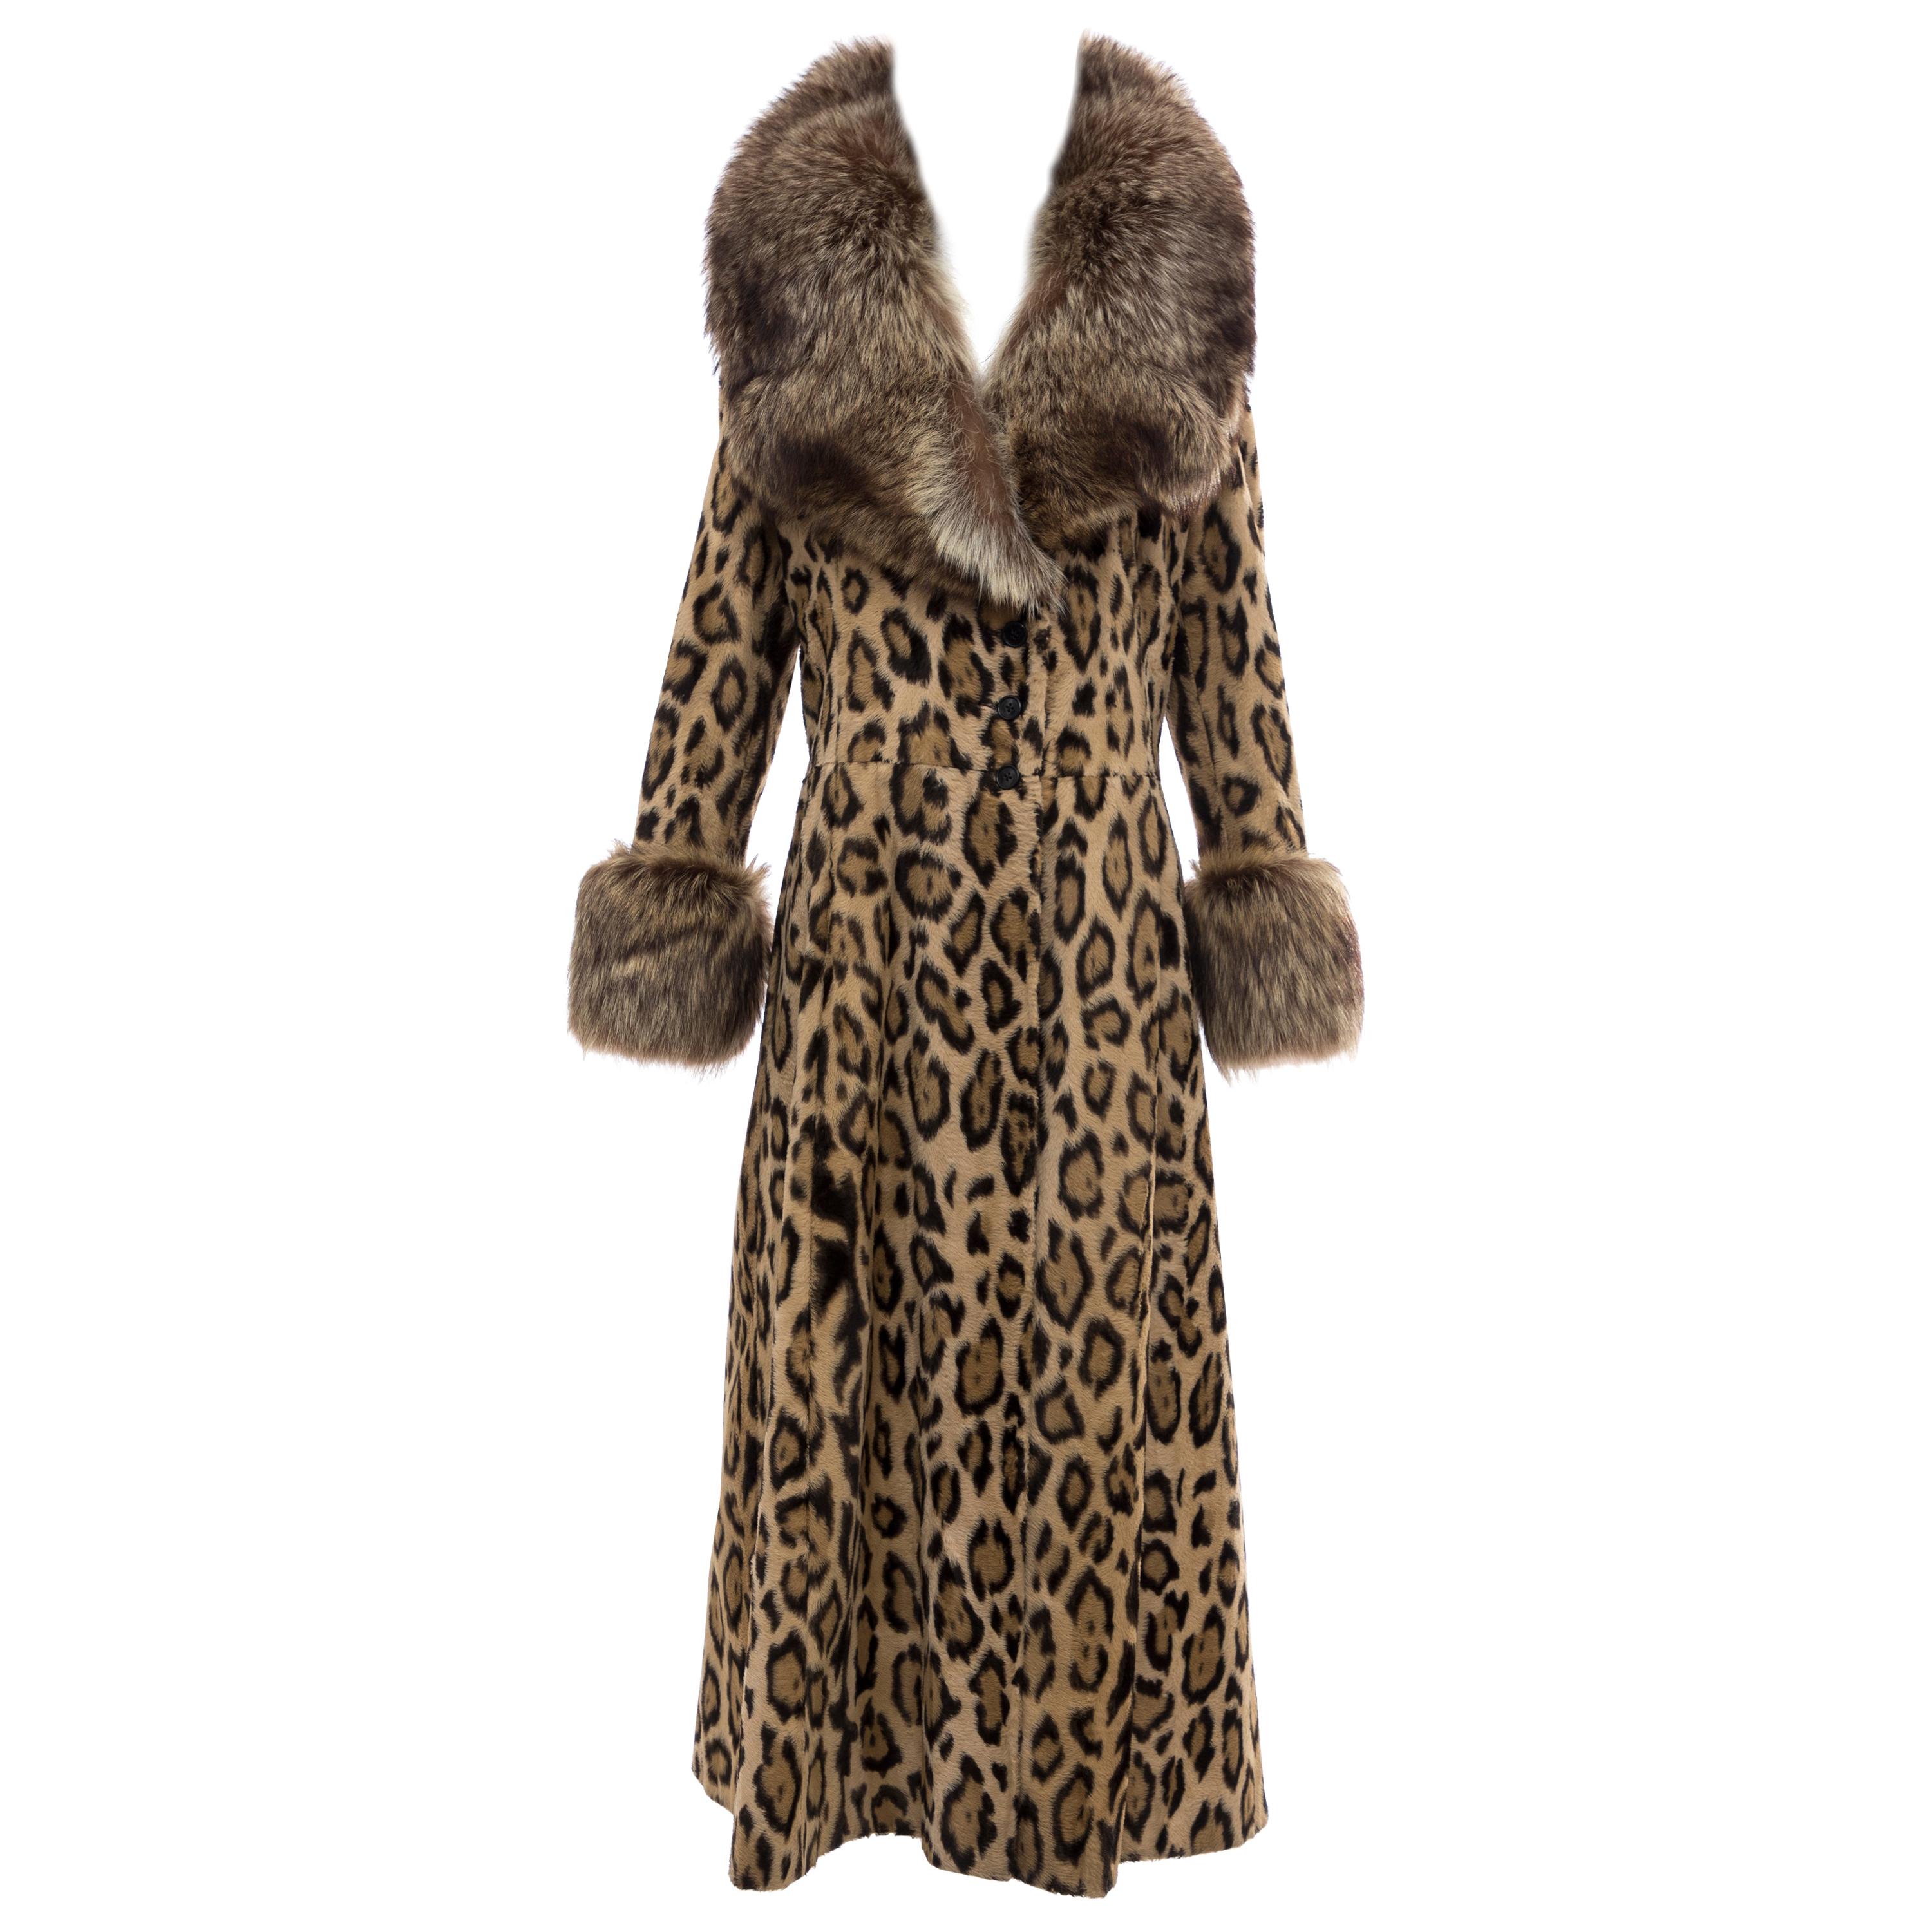 Goldring's Couture Faux Leopard Coat Dramatic Fur Collar & Cuffs, Circa: 1970's